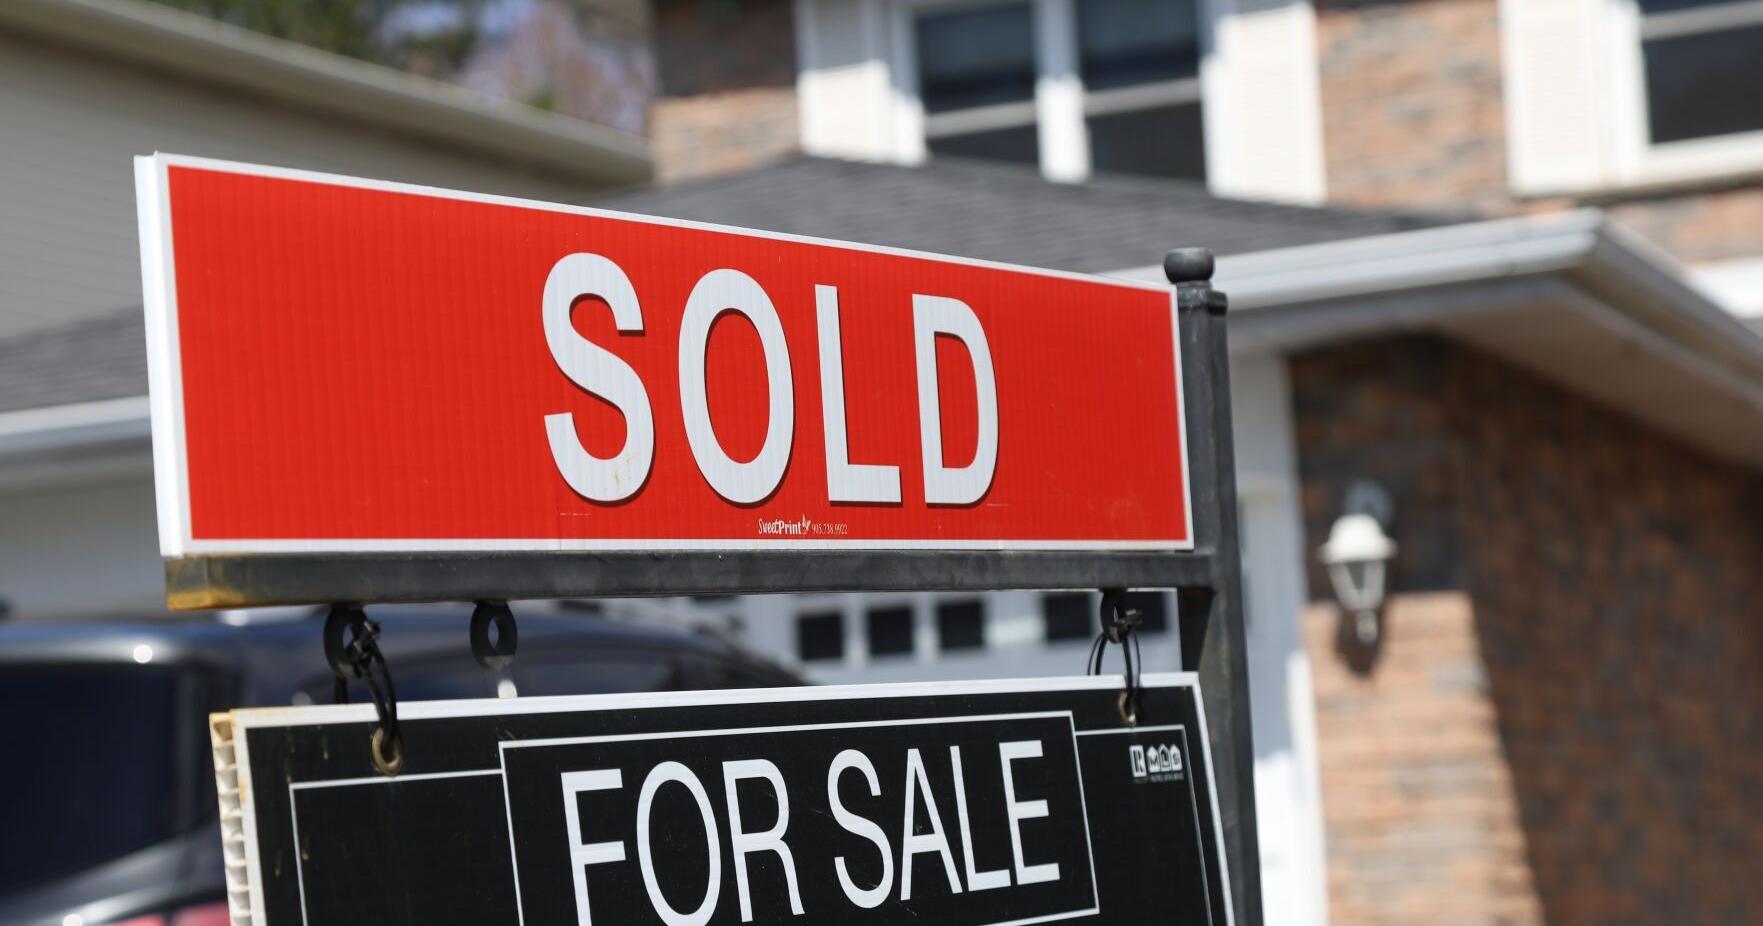 Brampton real estate prices rising after precipitous drop